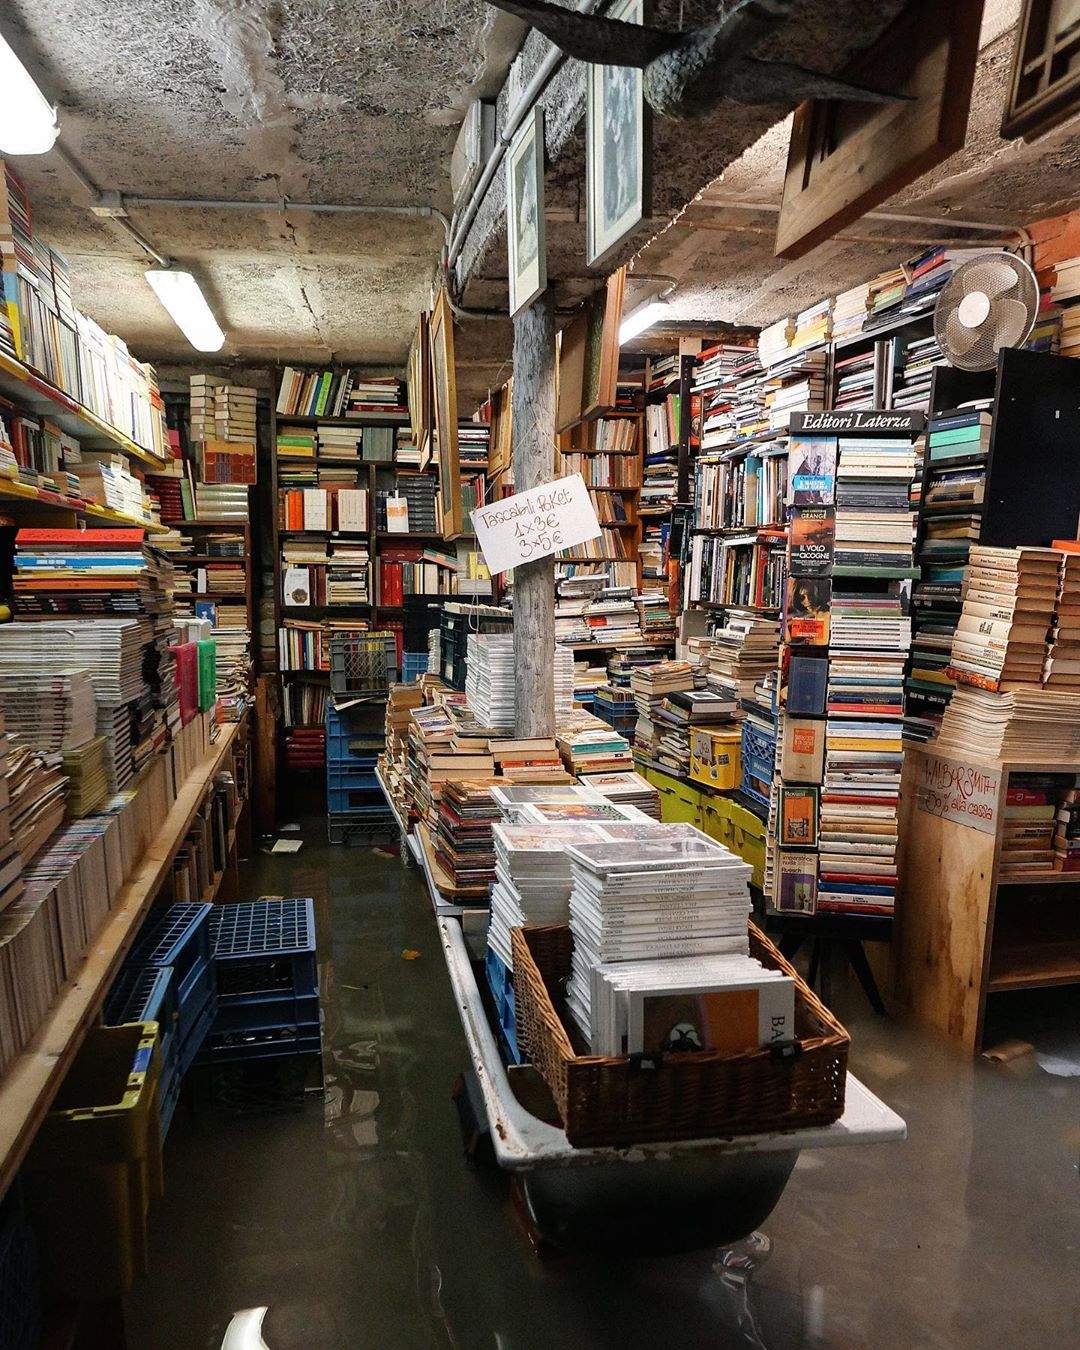 Acqua Alta bookstore in Venice hit by tide, lost thousands of books 